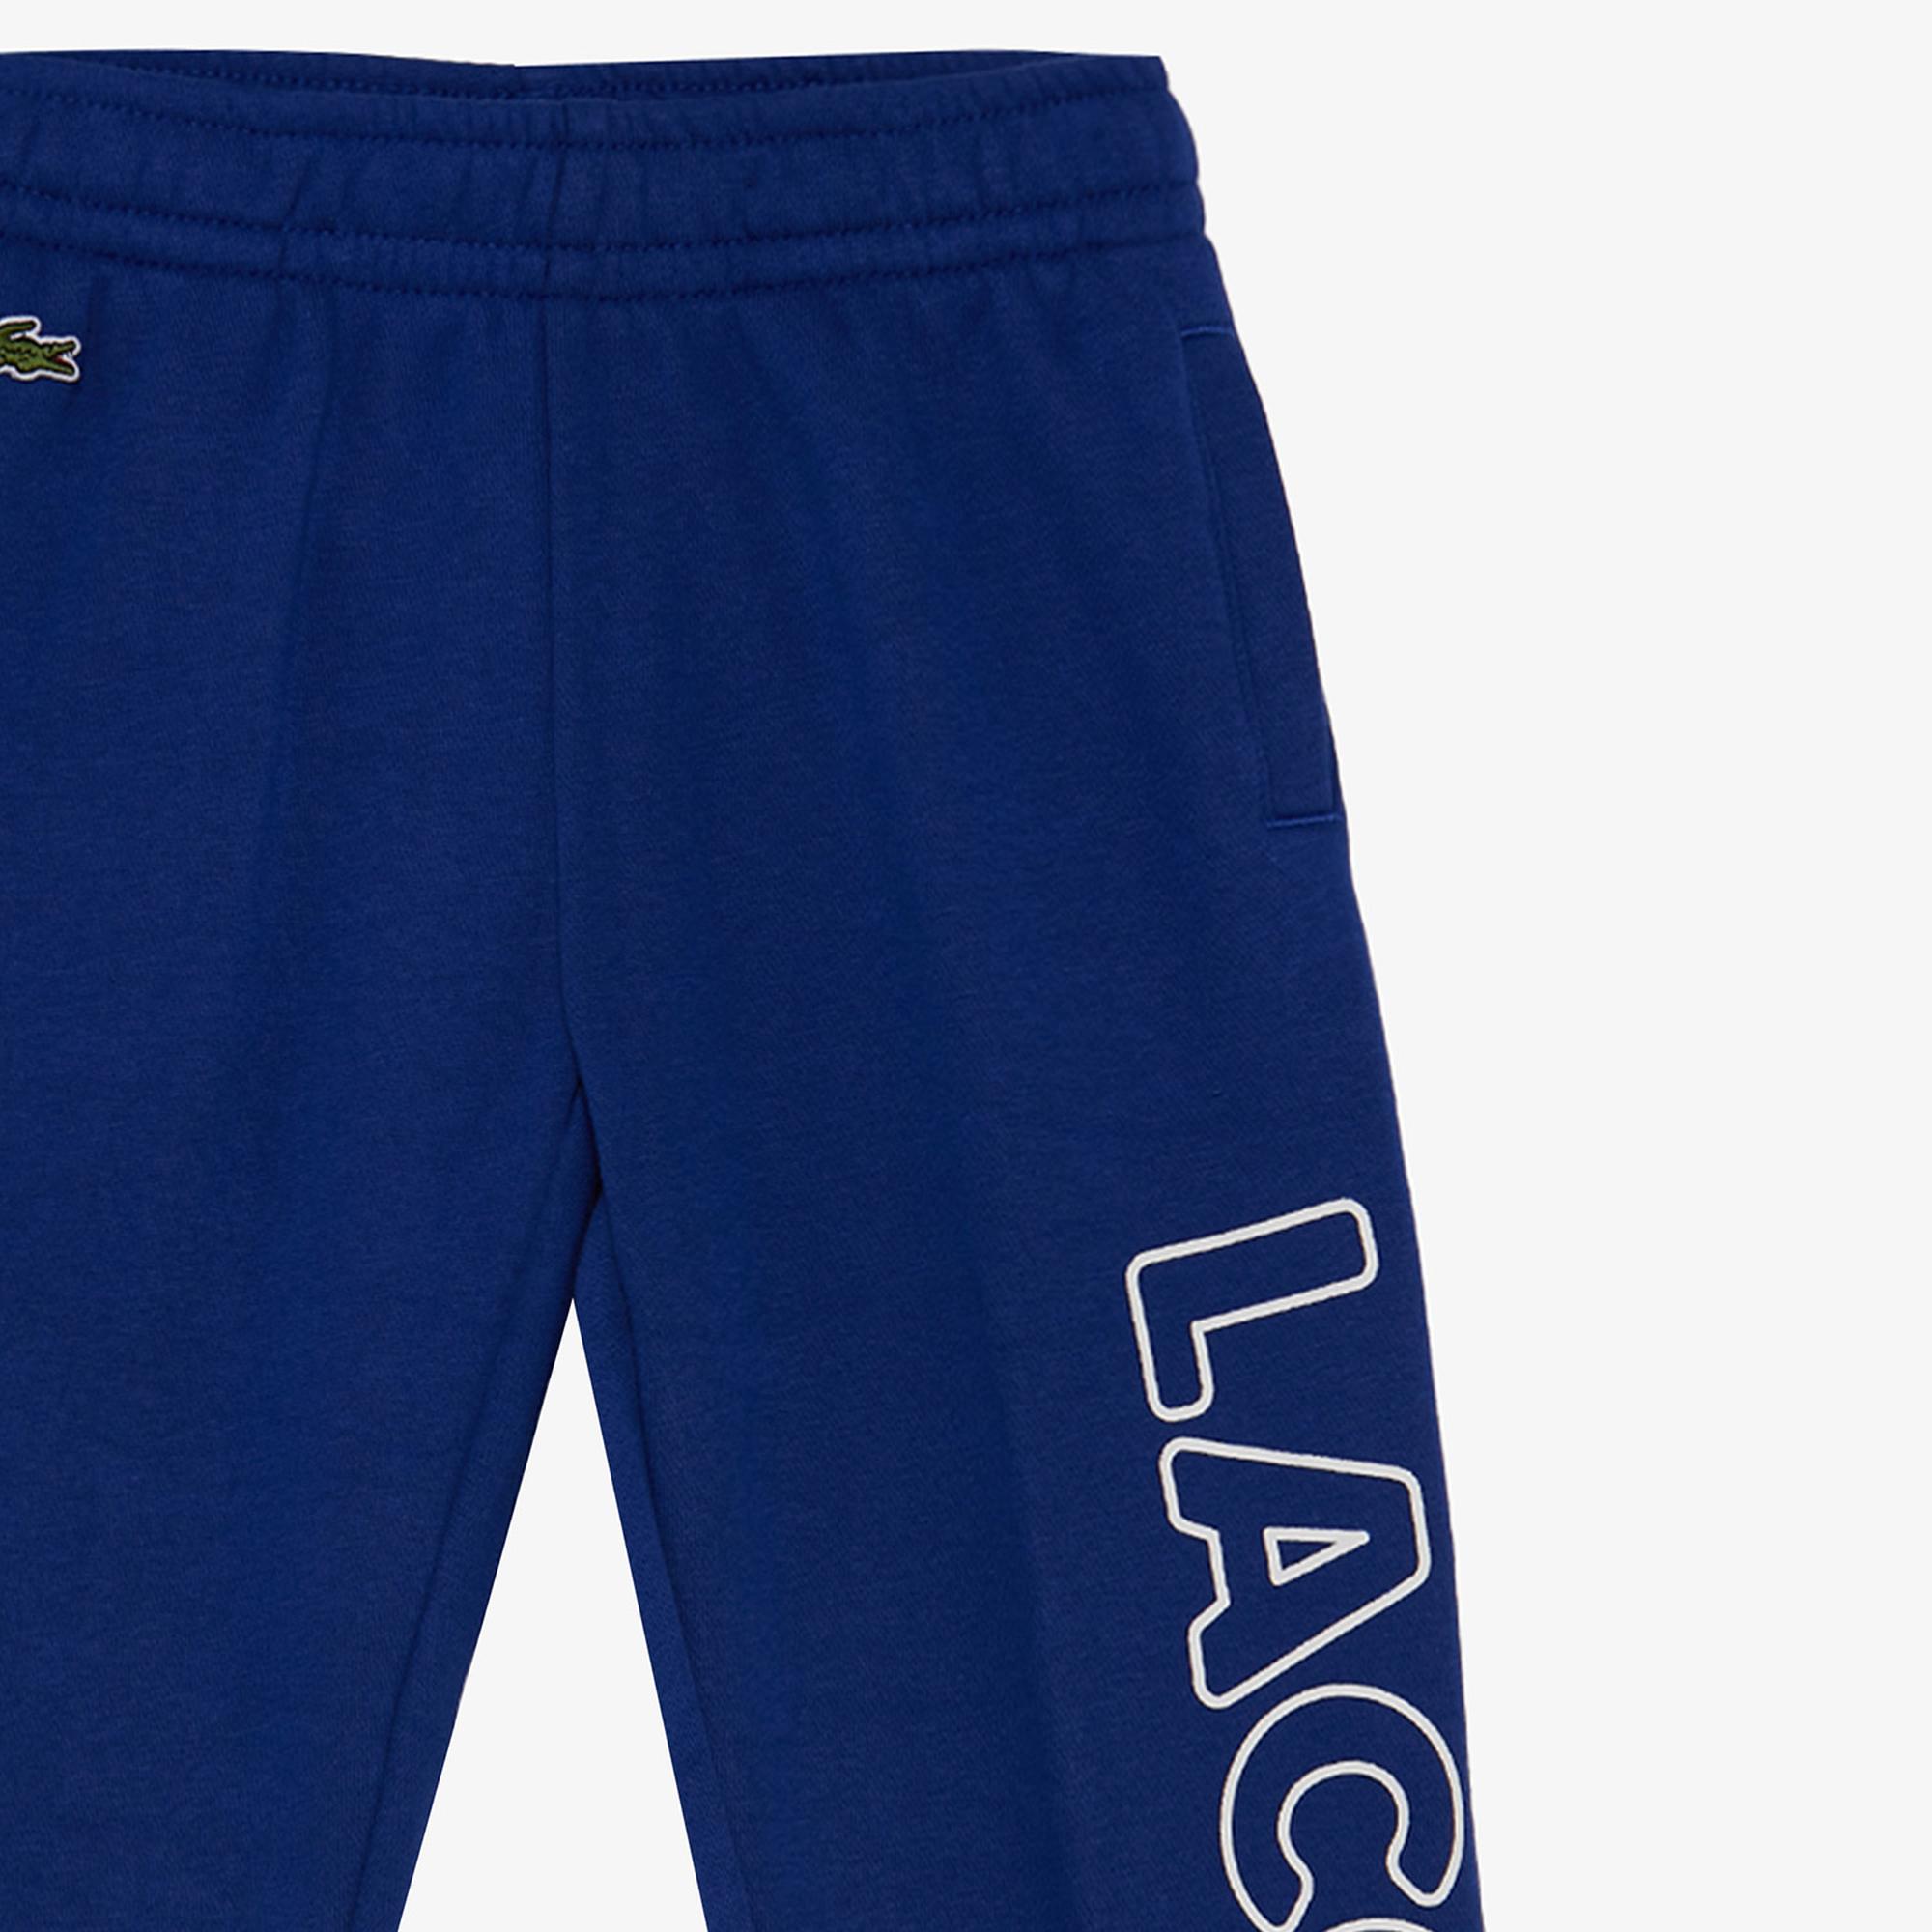 Lacoste Boys' Lettered Fleece Jogging Pants